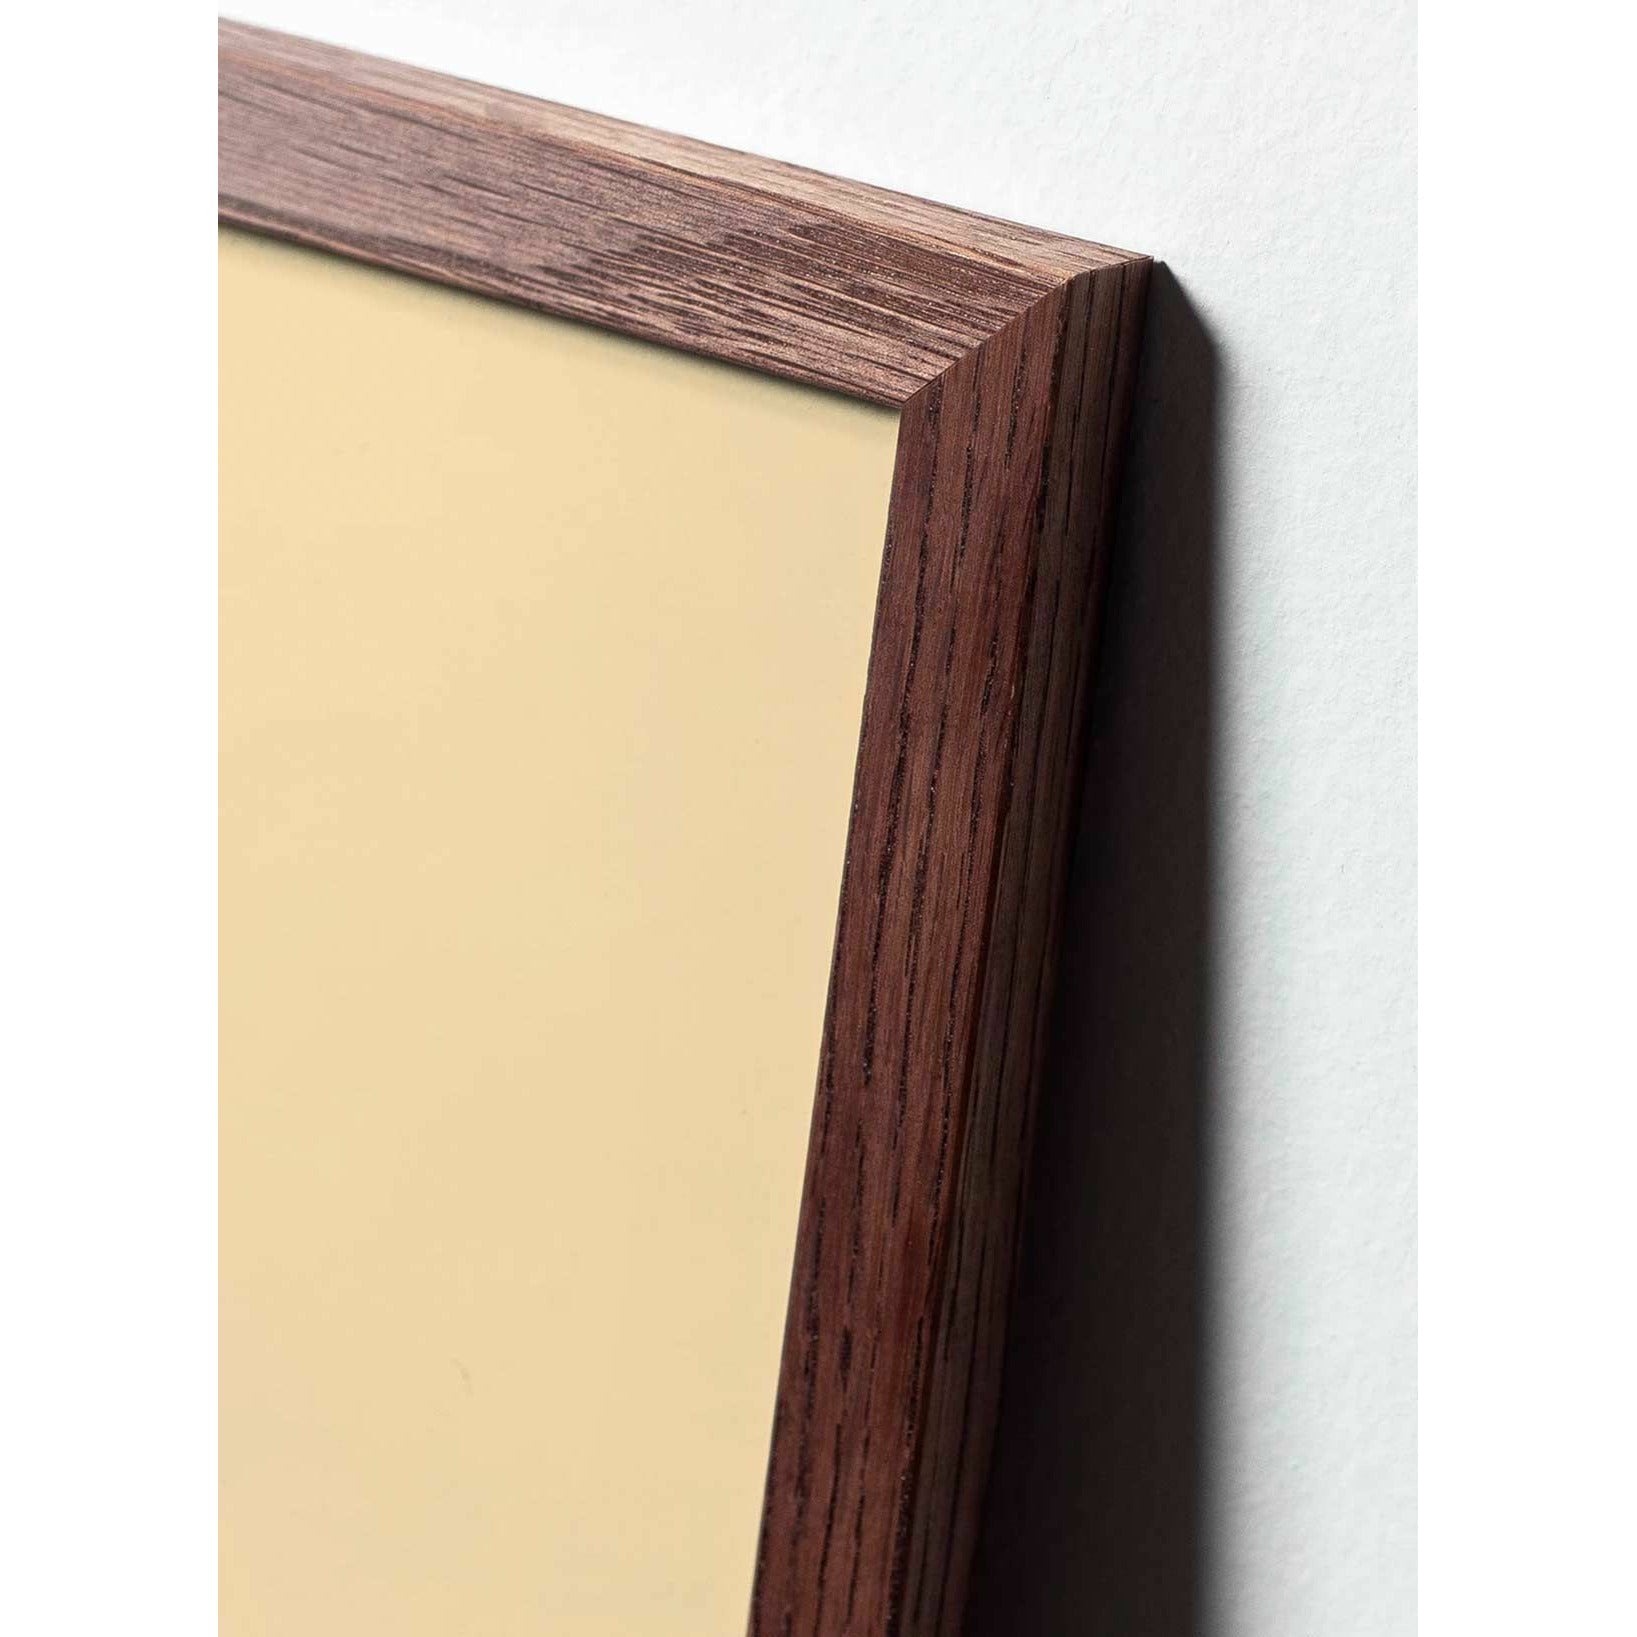 Brainchild Teddybeerlijnposter, frame gemaakt van donker hout 50x70 cm, blauwe achtergrond